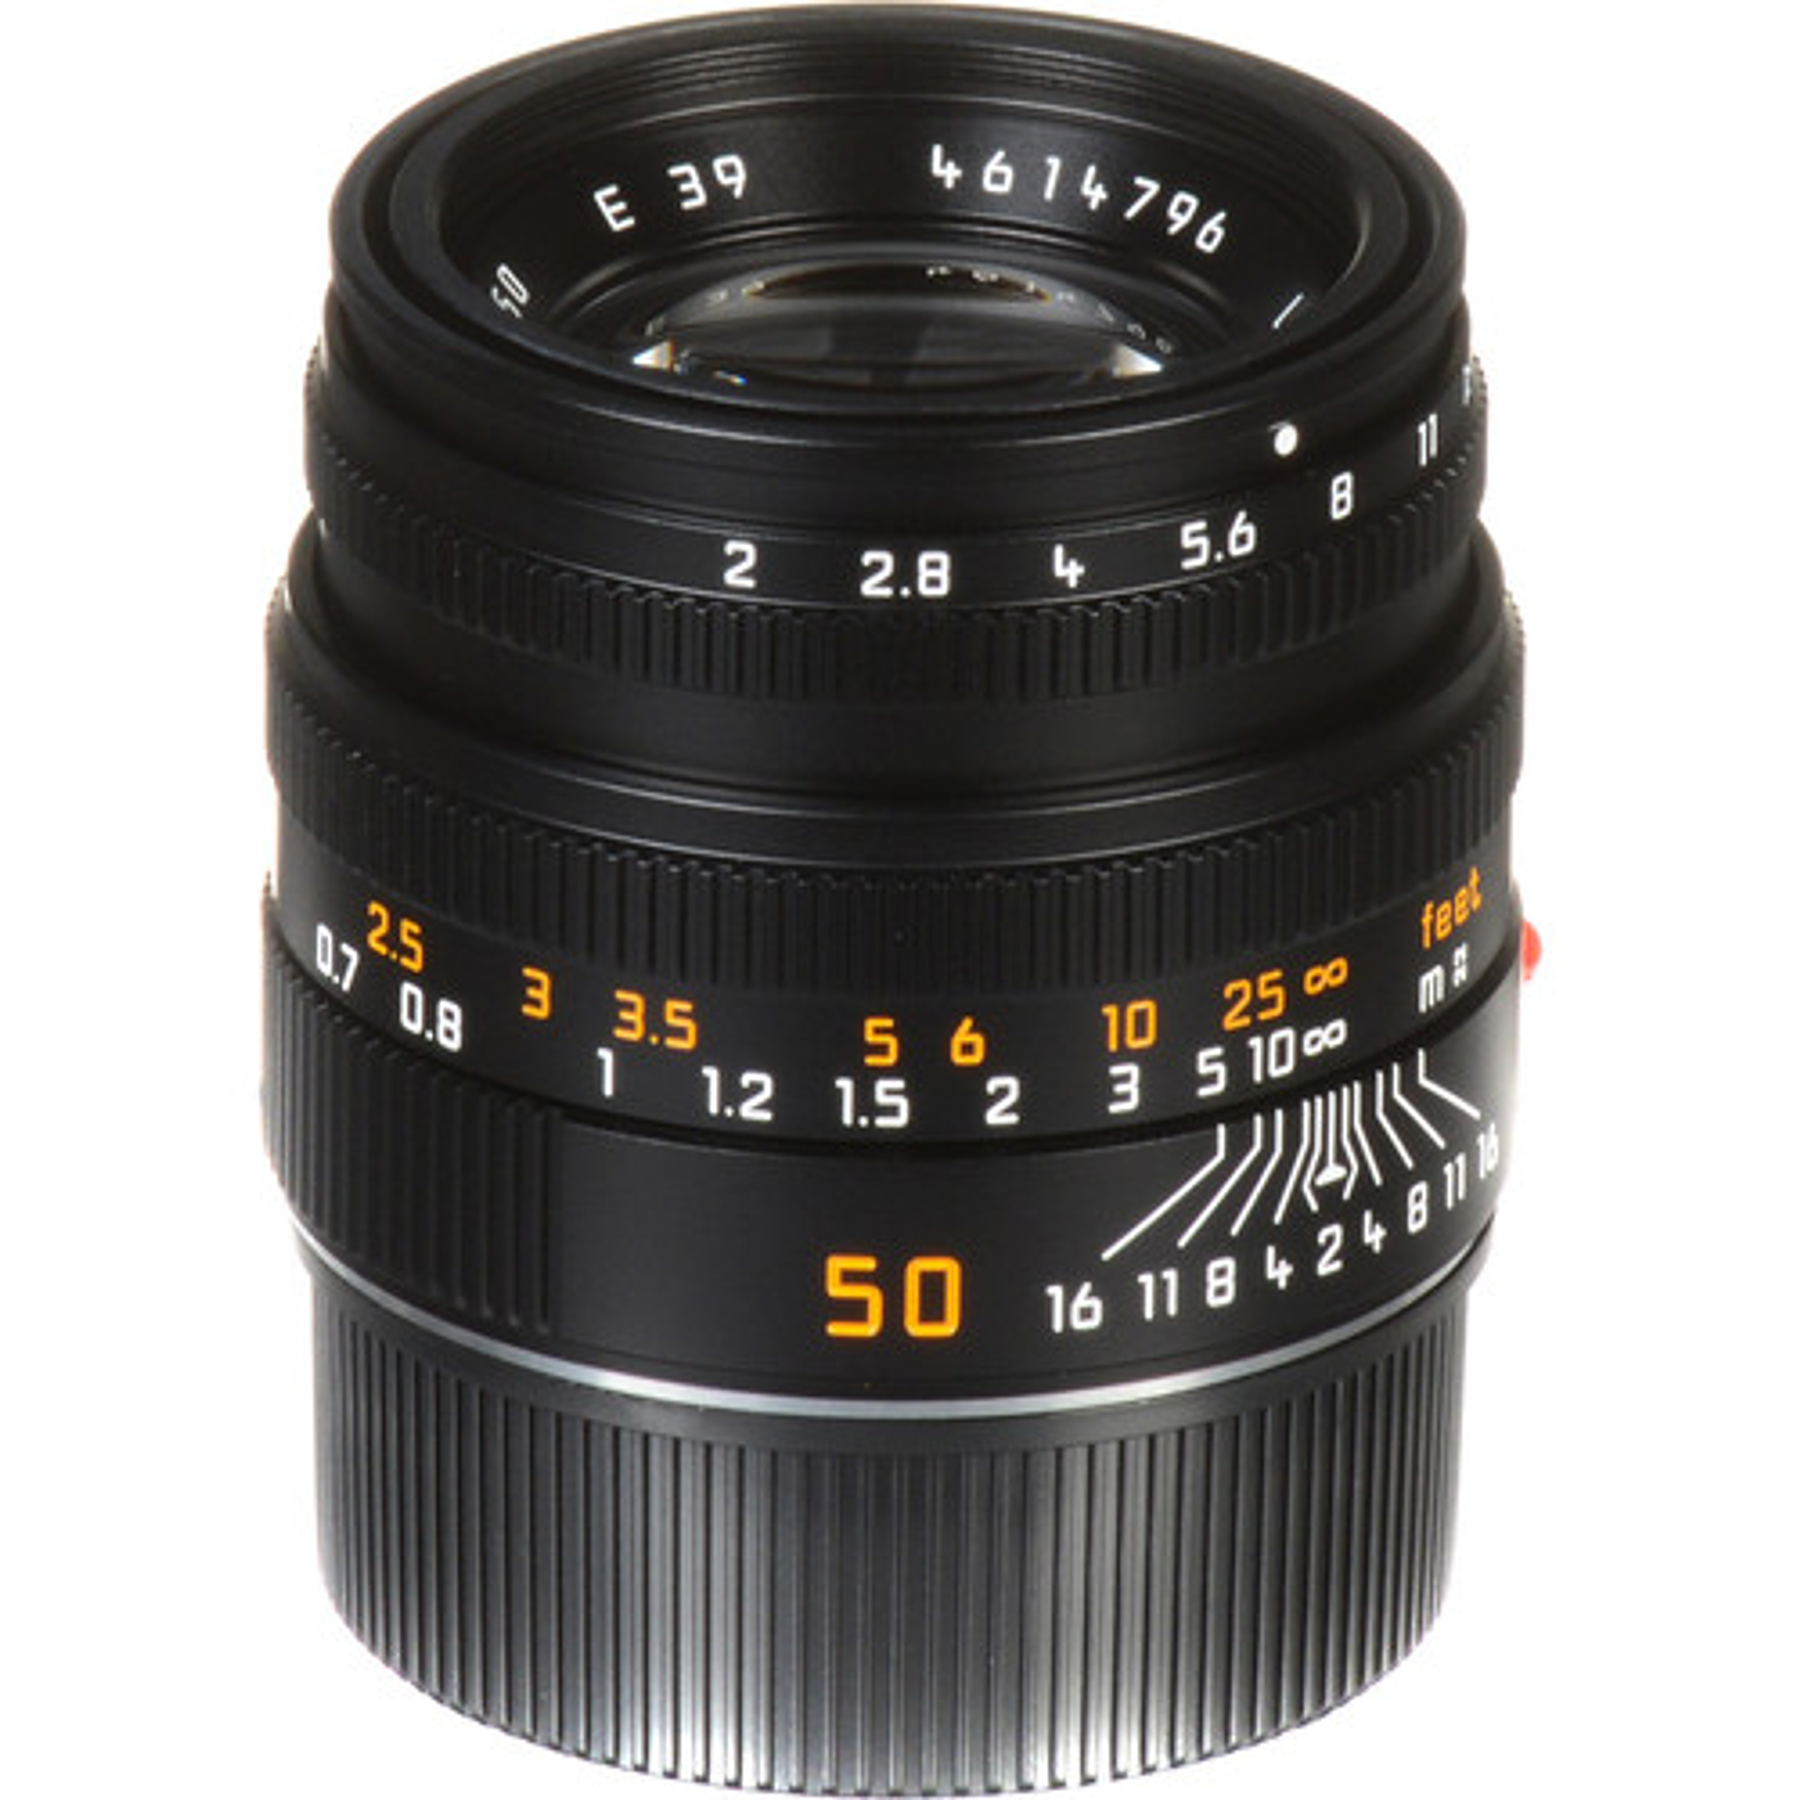 Leica Summicron-M 50mm f/2